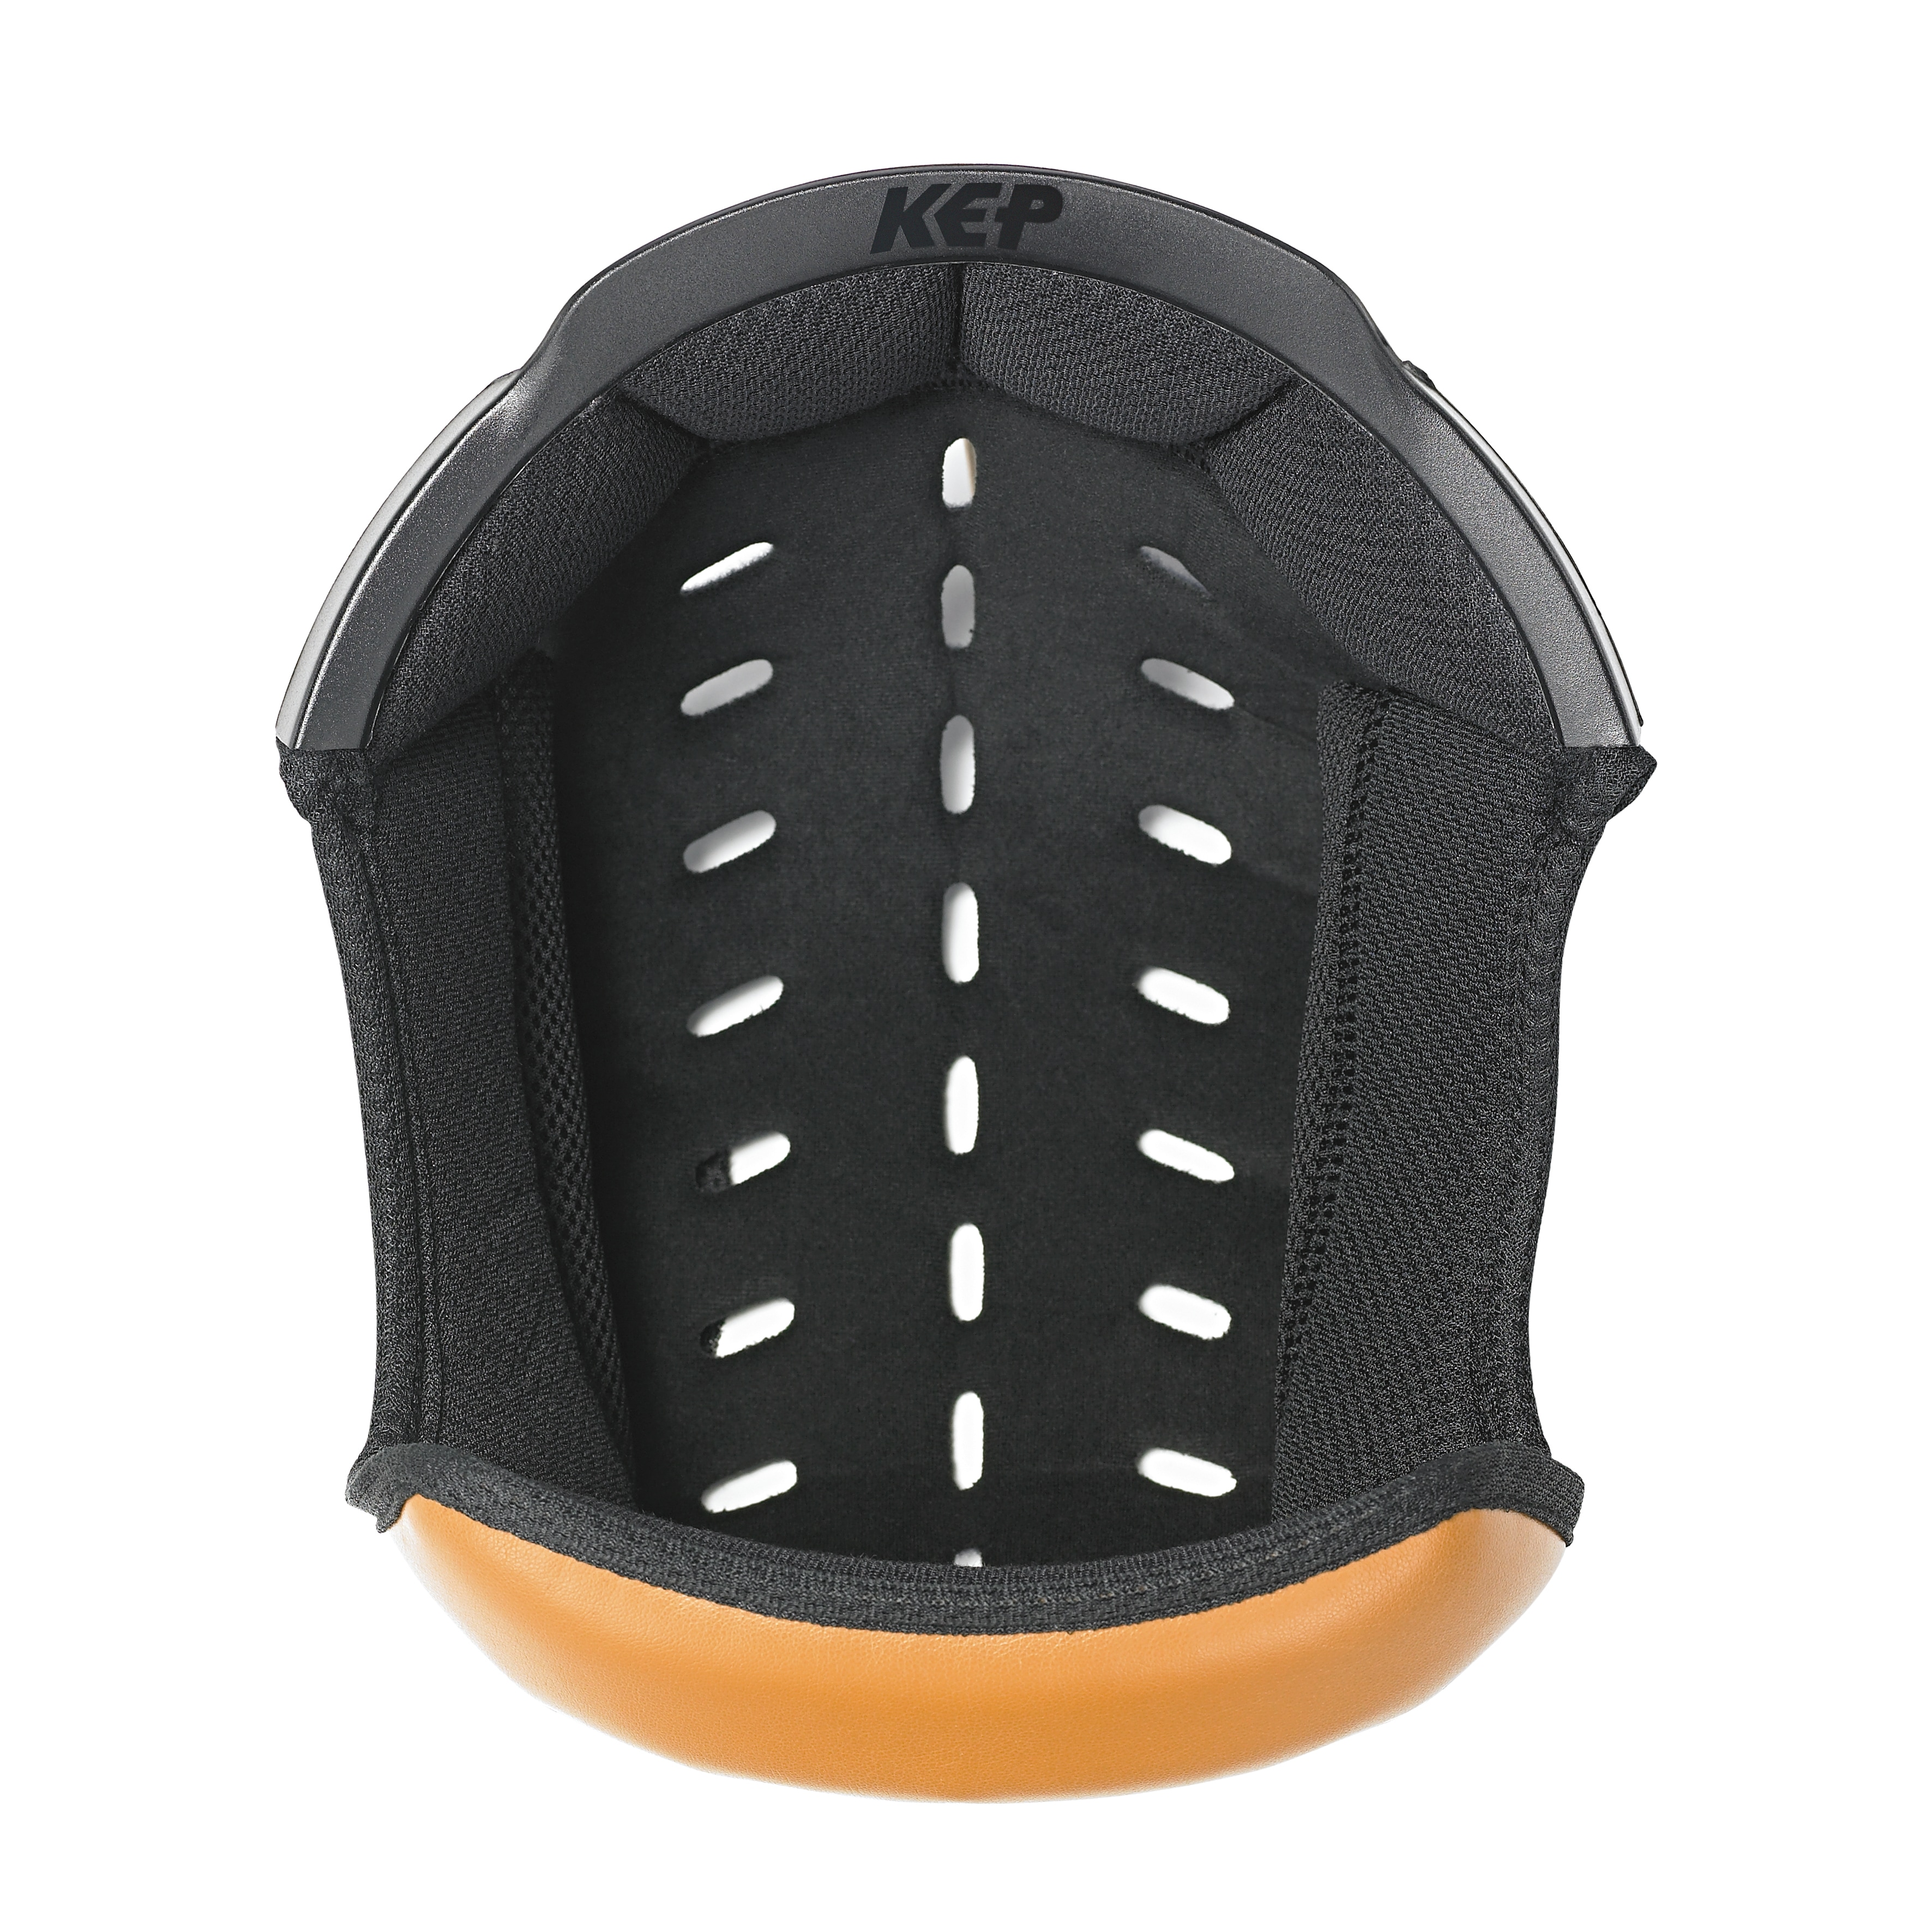 Inner pad for Kep helmet - Round/54  - Beige